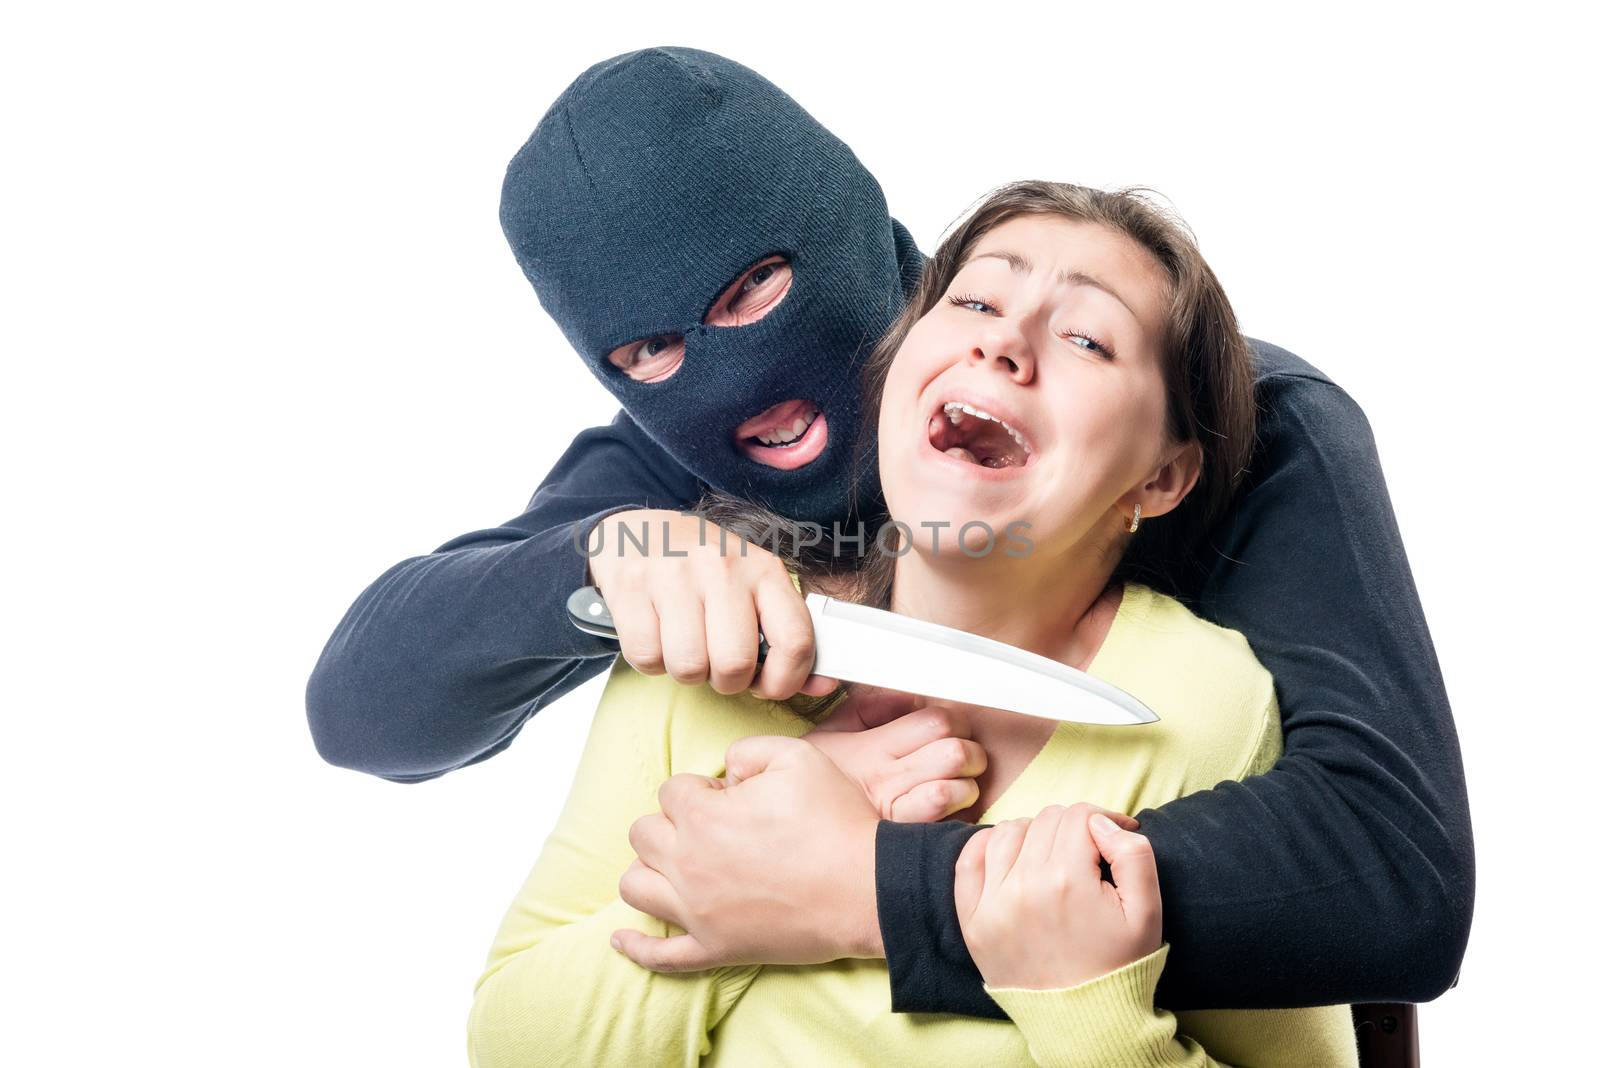 A terrorist in a balaclava threatens a victim with a knife again by kosmsos111